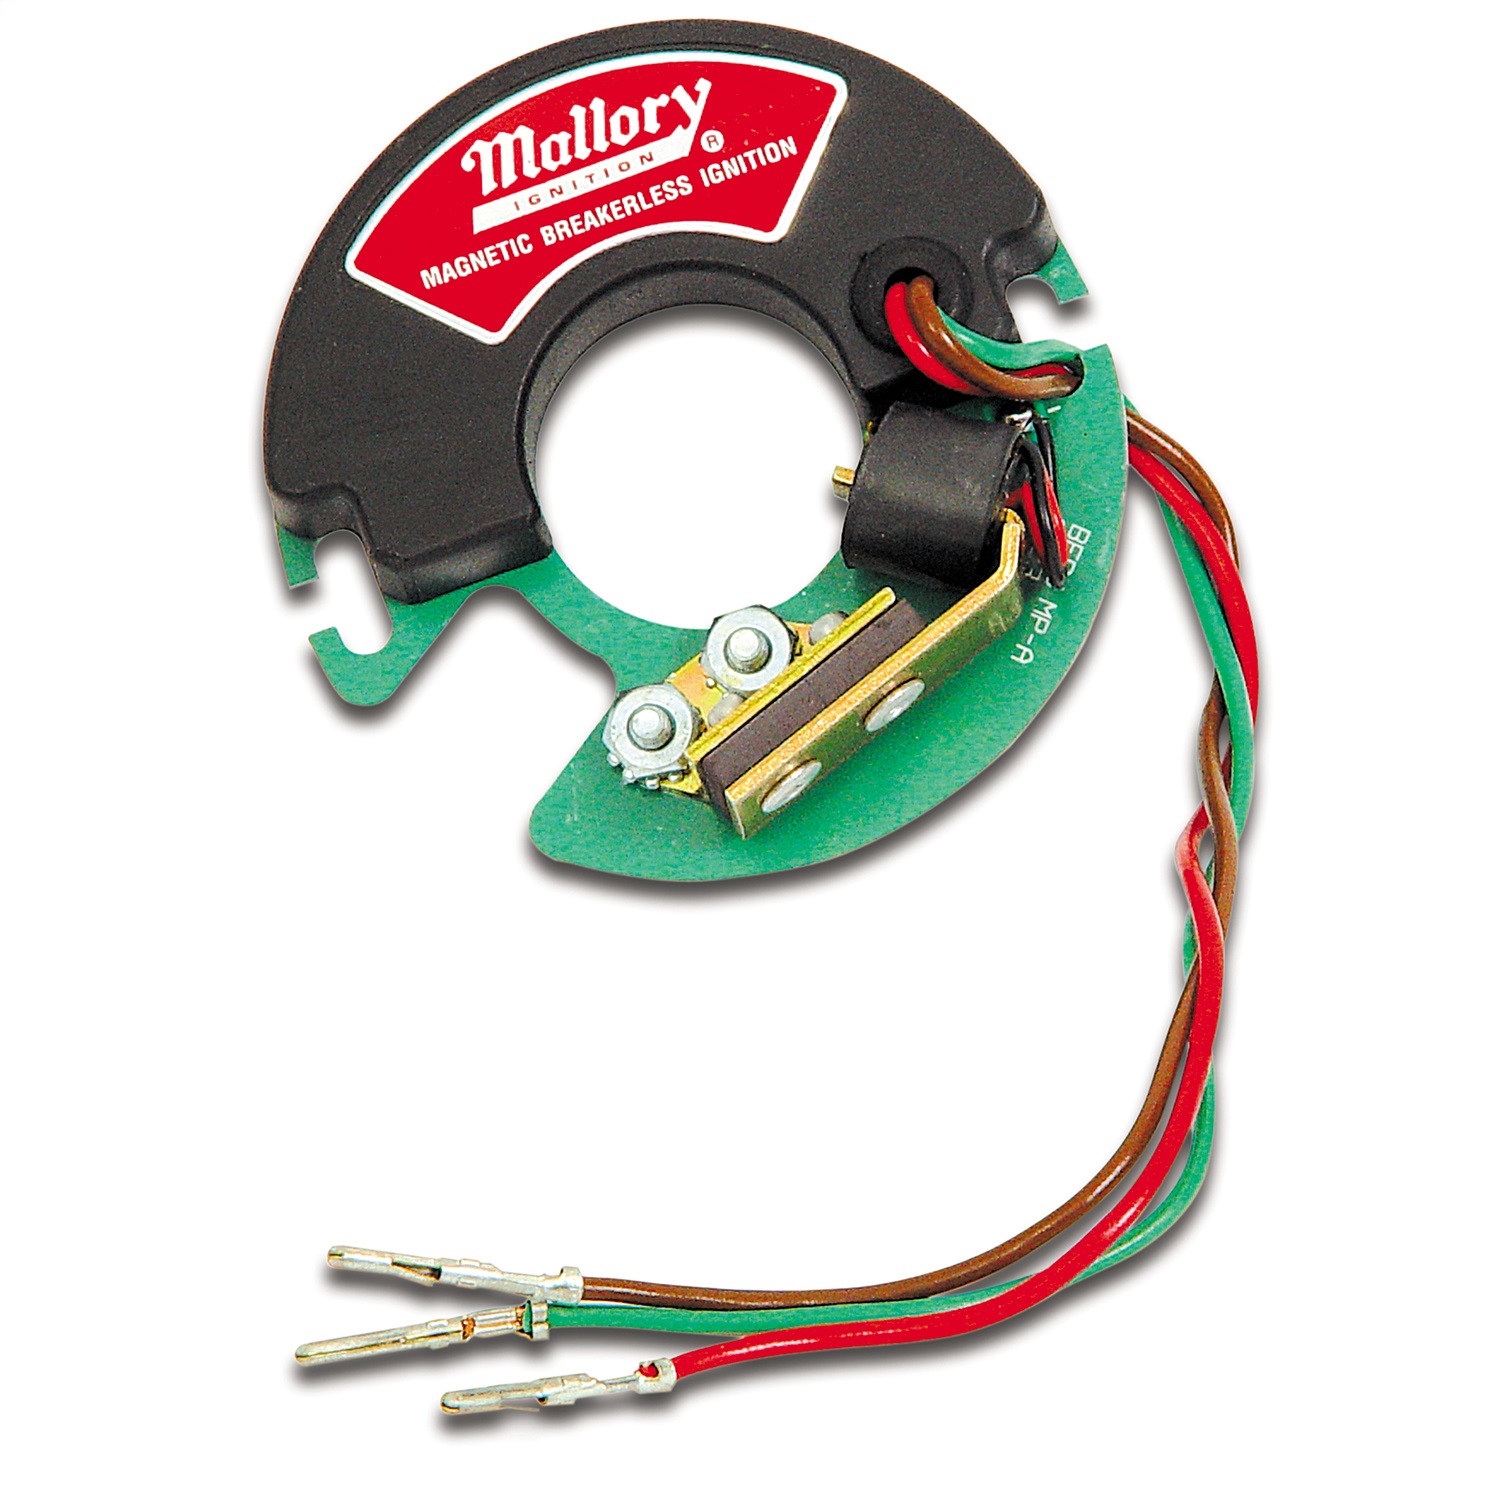 Mallory Mallory 609 Magnetic Breakerless Ignition Module